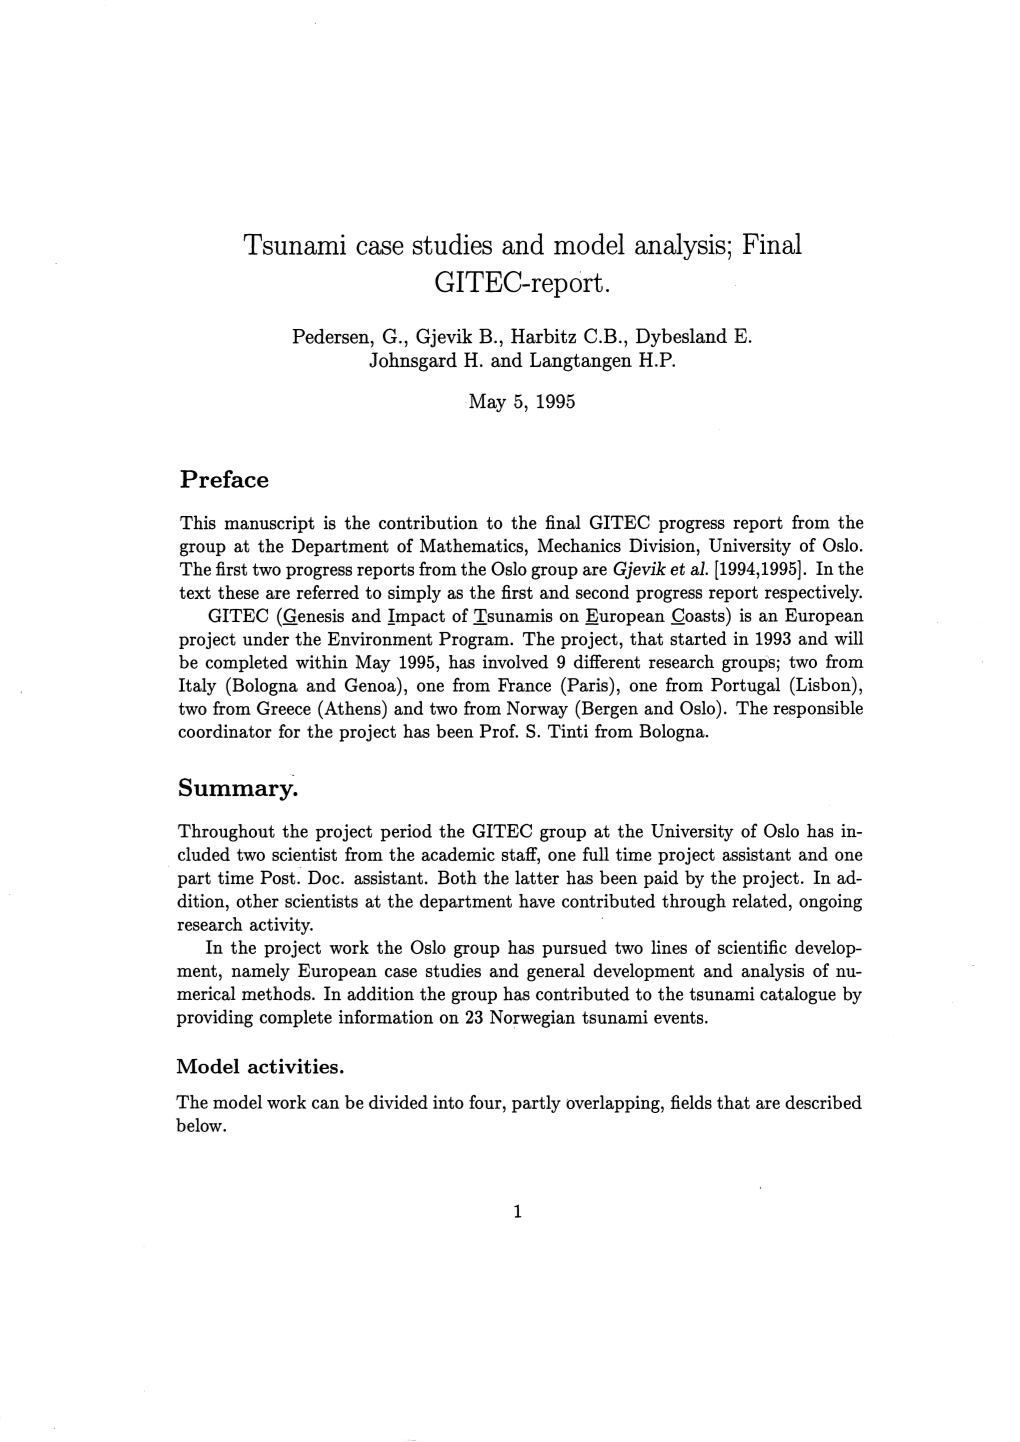 Tsunami Case Studies and Model Analysis; Final GITEC-Report